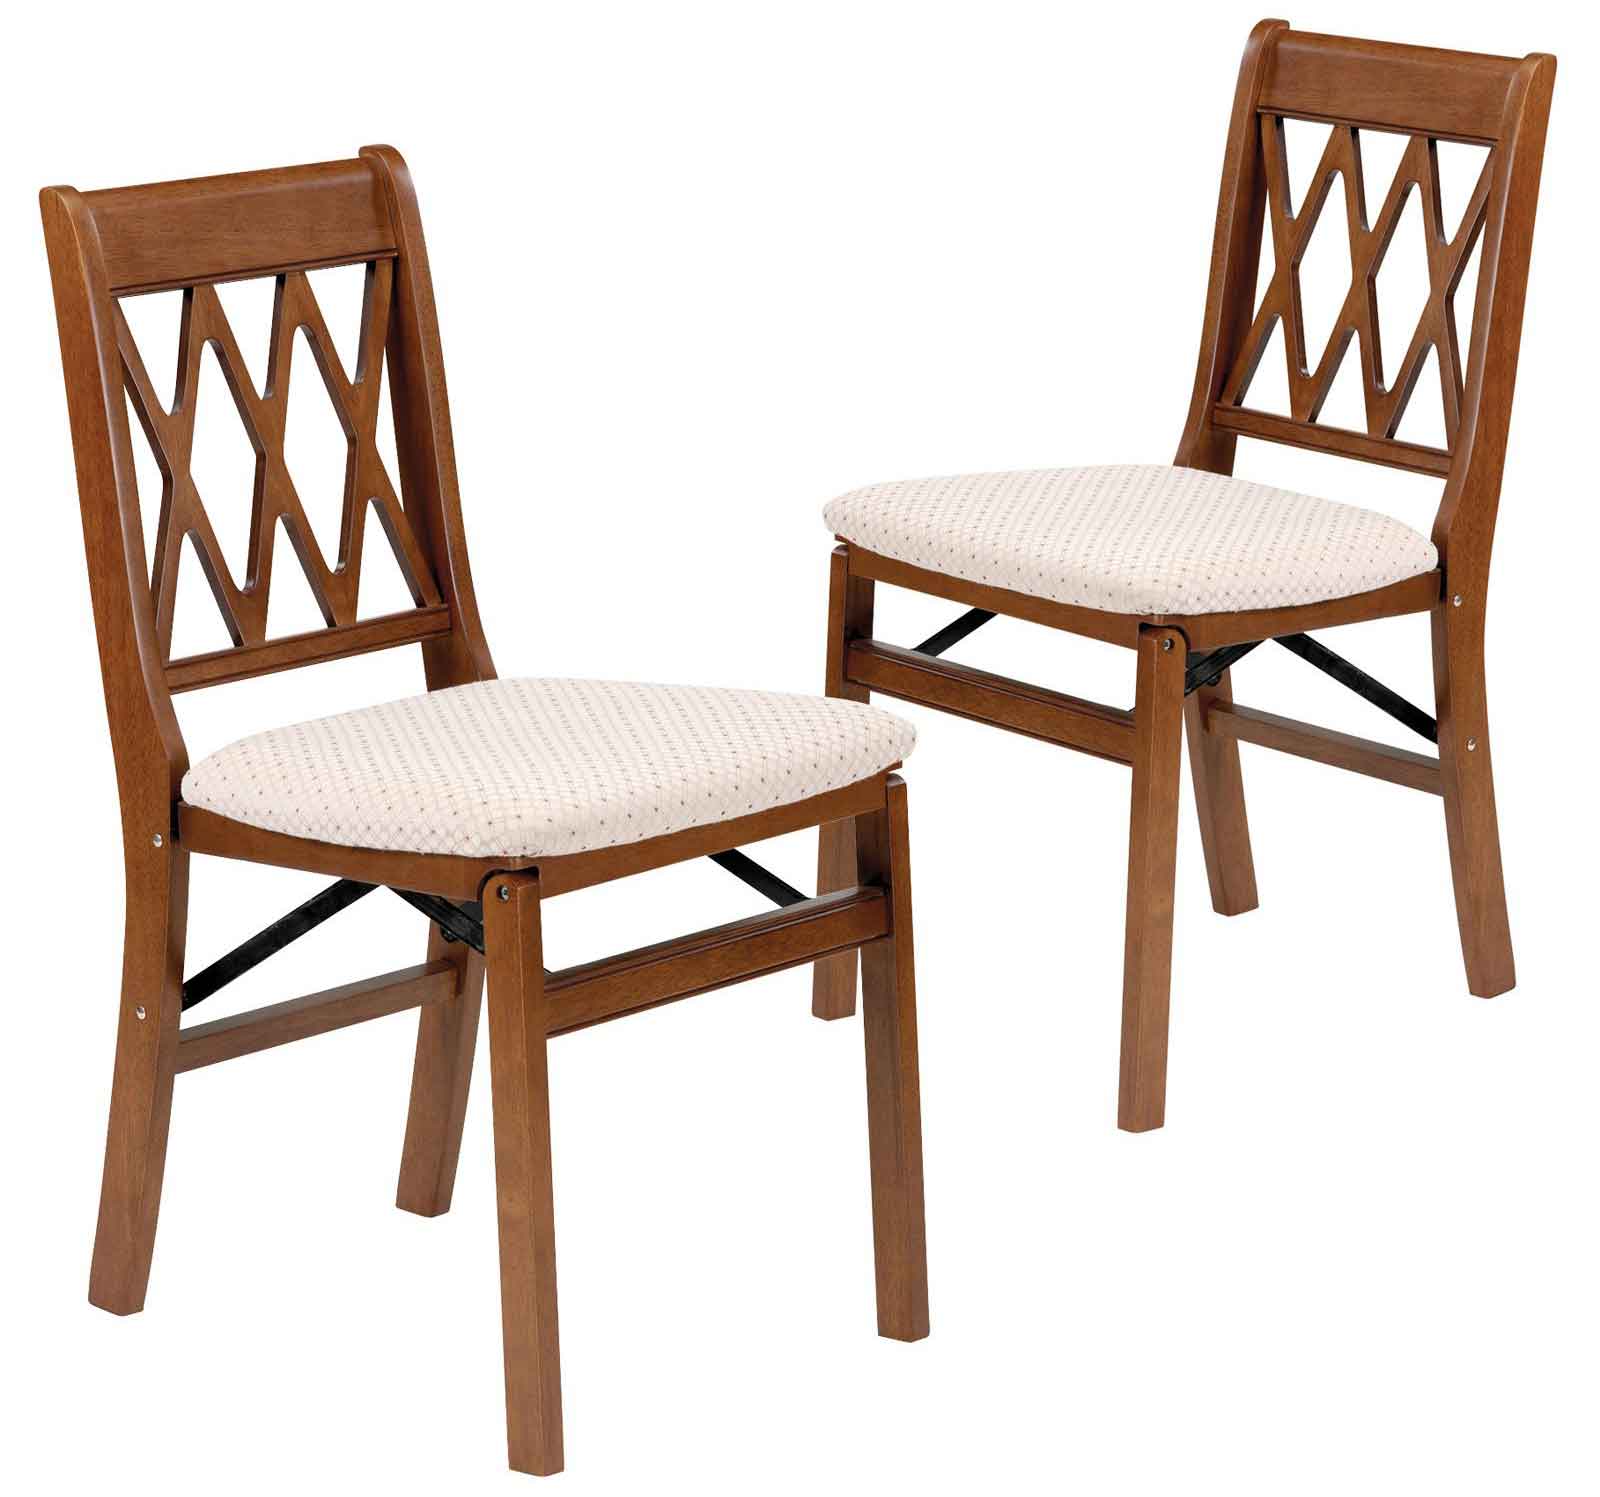 Wooden Chairs Furniture Designs  An Interior Design 